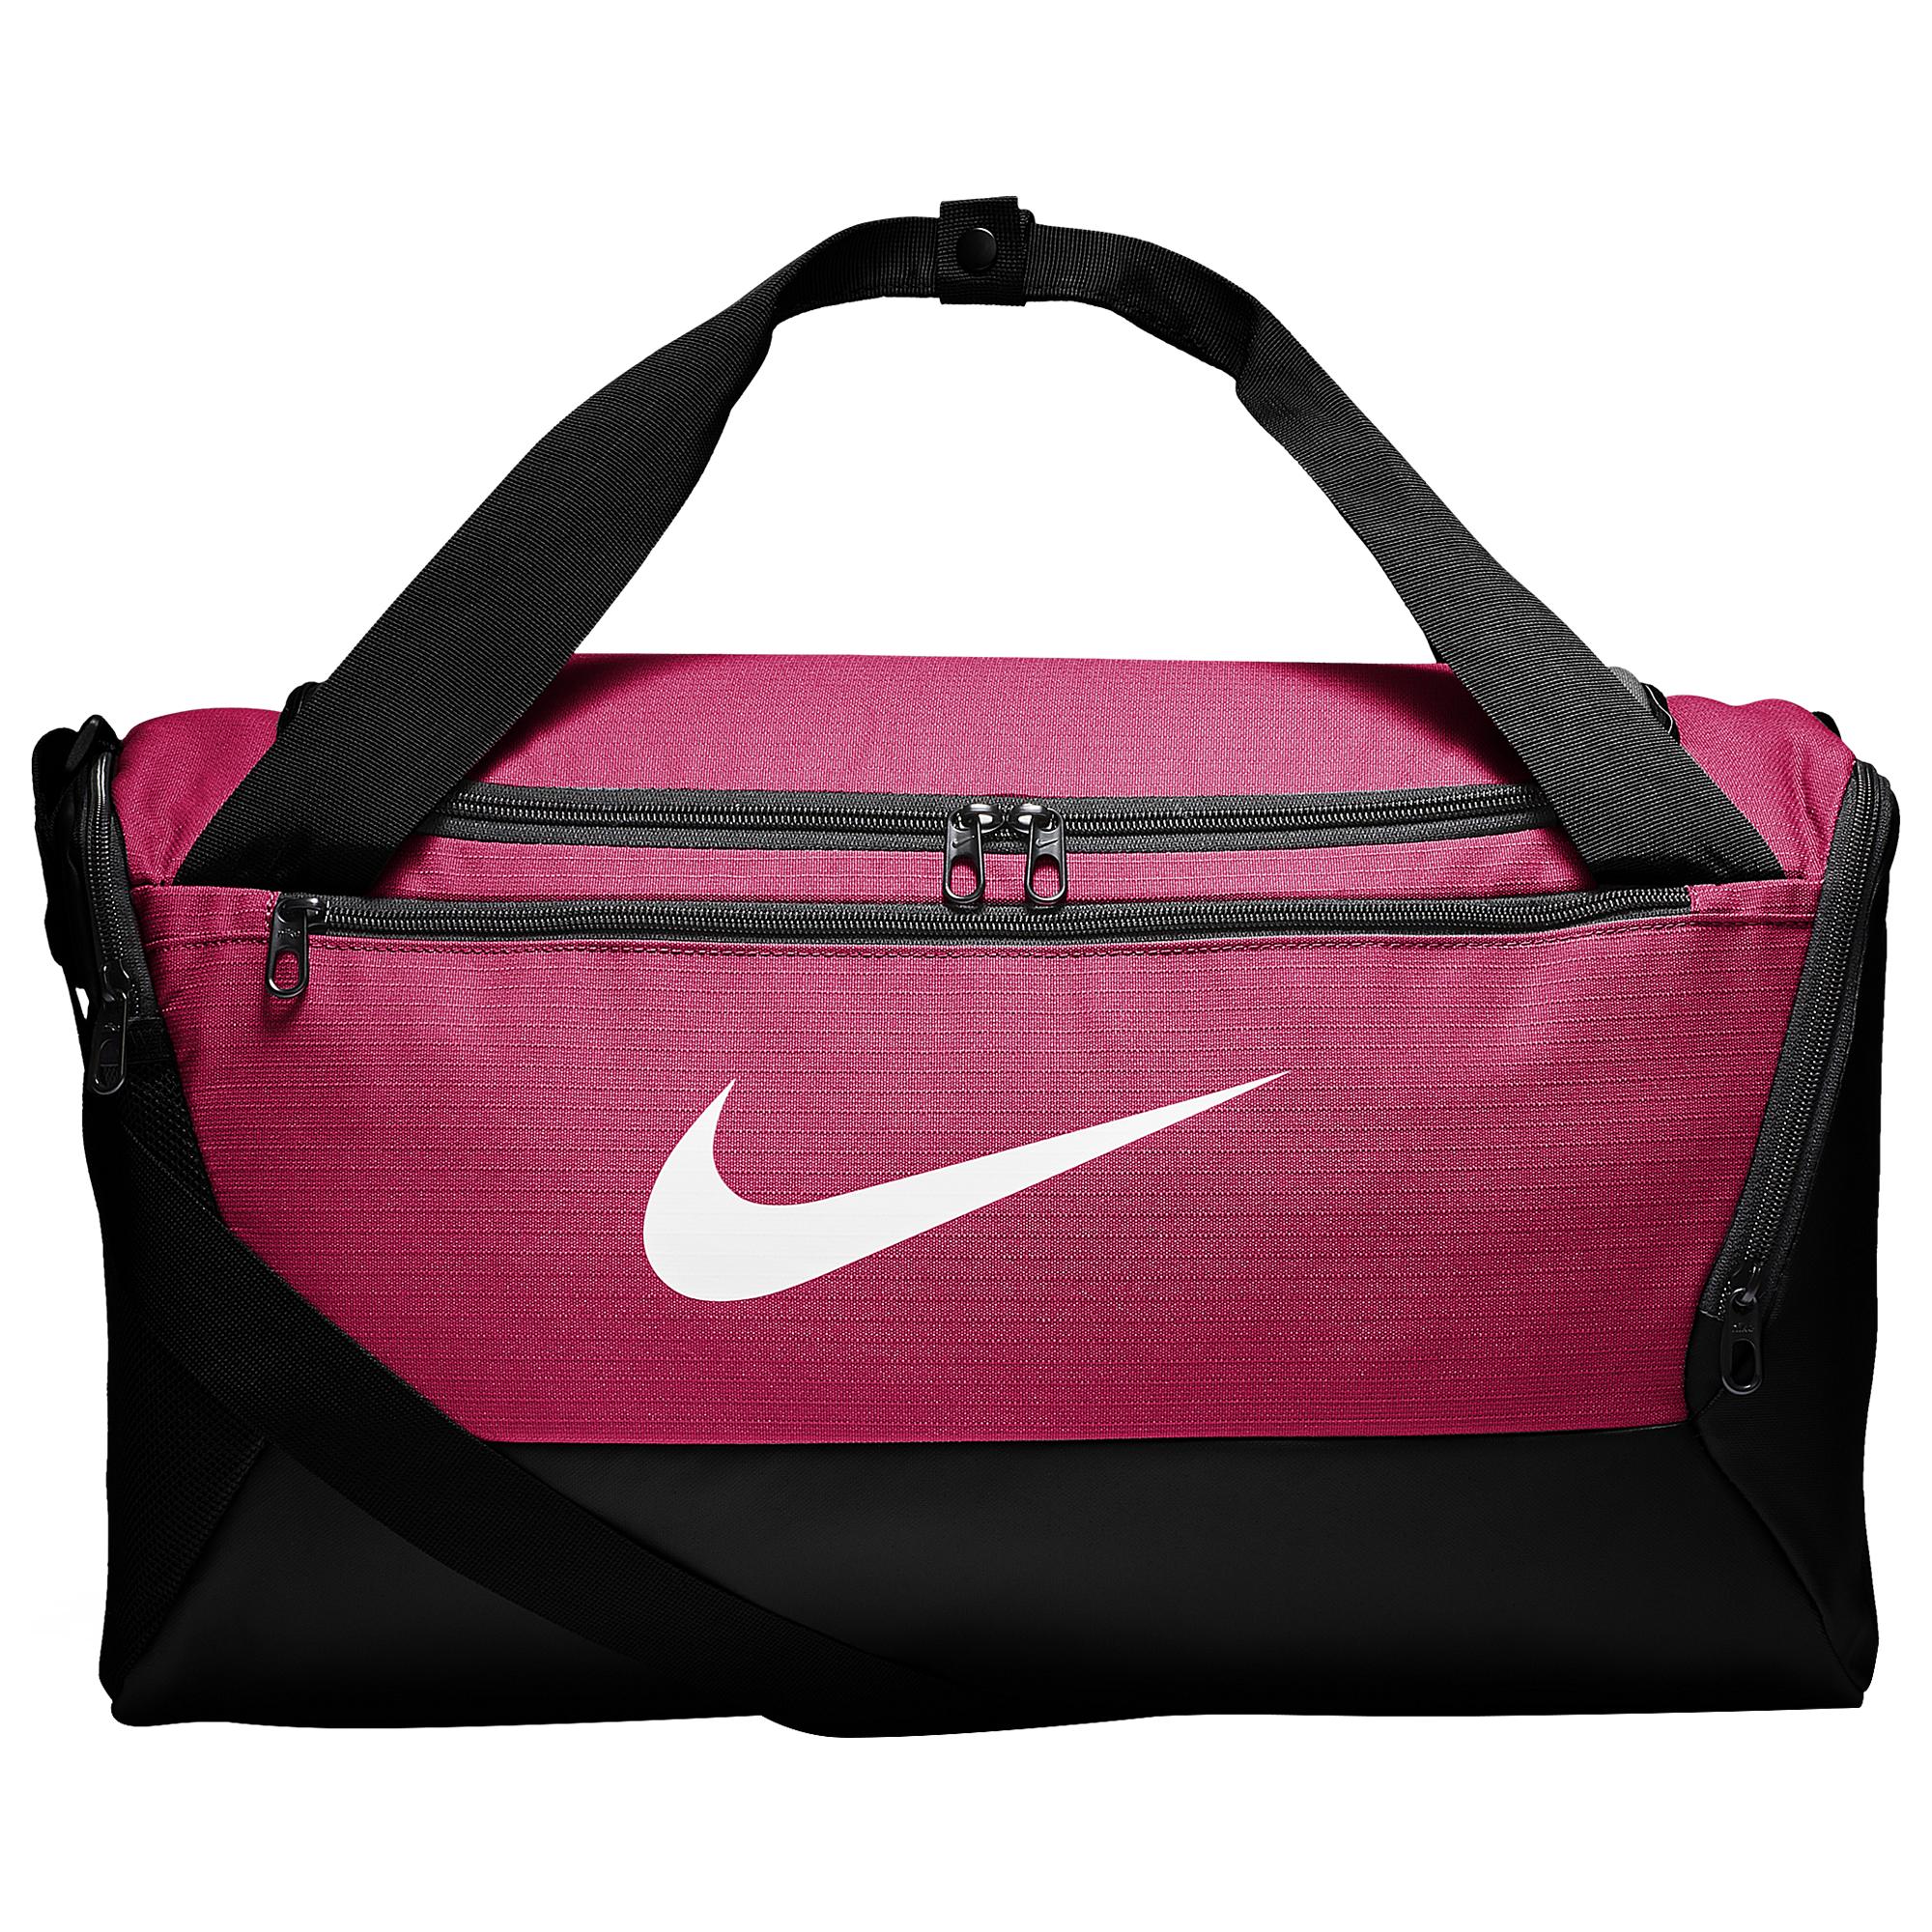 Nike Synthetic Brasilia Small Duffel Bag in Pink - Lyst